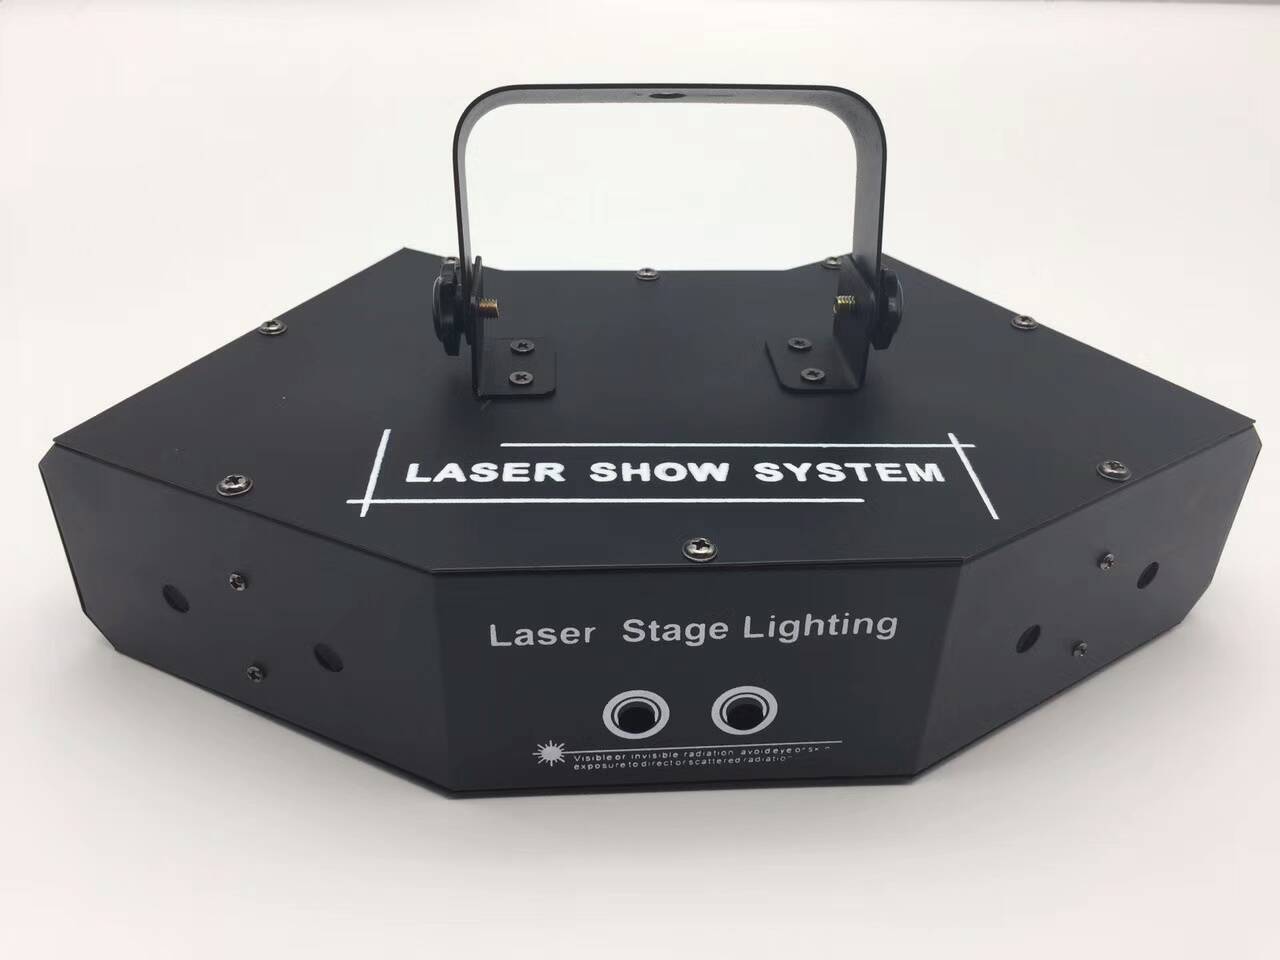 Six Eye laser lights